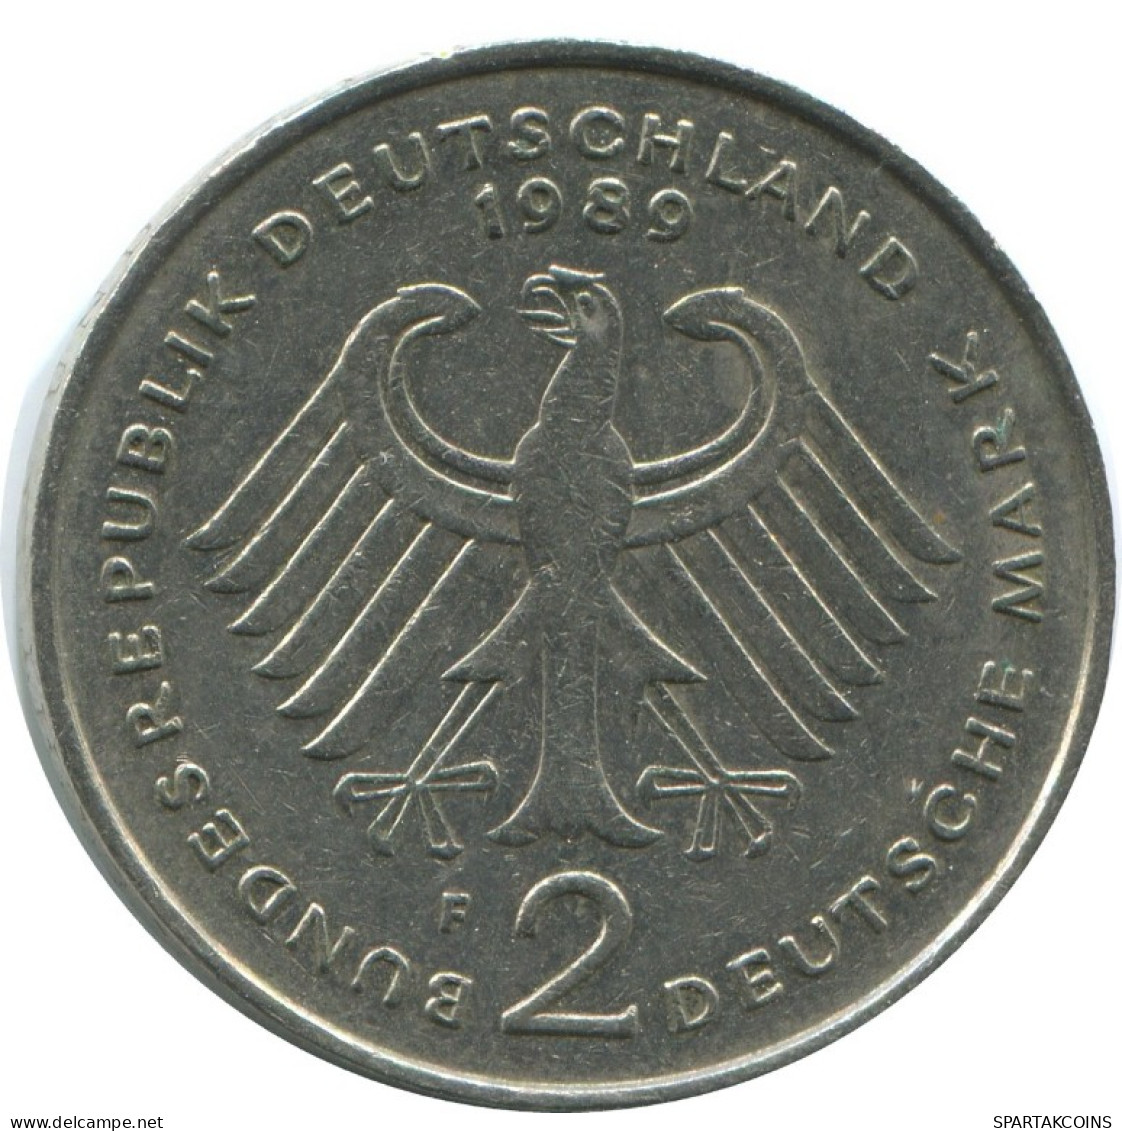 2 DM 1989 F K.SCHUMACHER WEST & UNIFIED GERMANY Coin #AG250.3.U.A - 2 Marcos